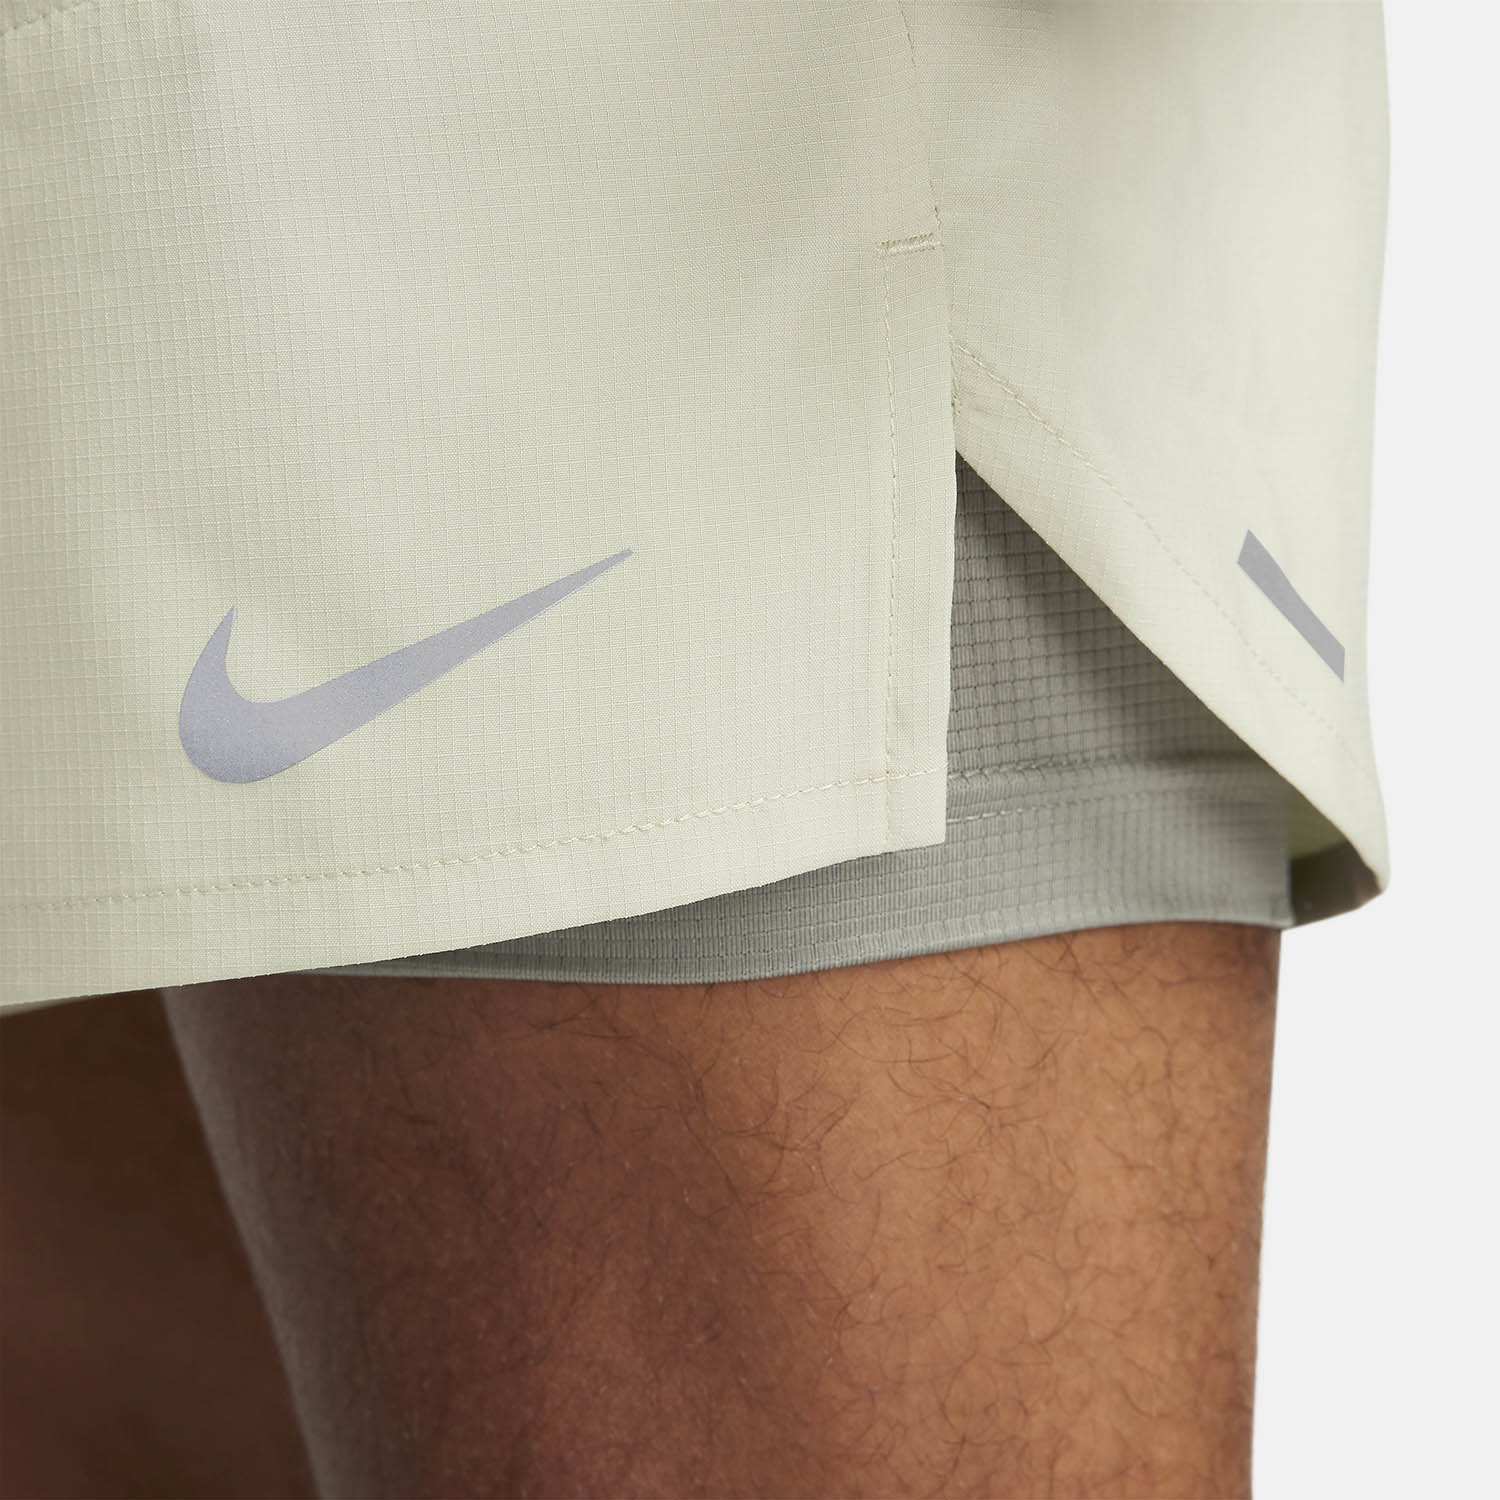 Nike Dri-FIT Stride 2 in 1 7in Pantaloncini - Olive Aura/Dark Stucco/Reflective Silver